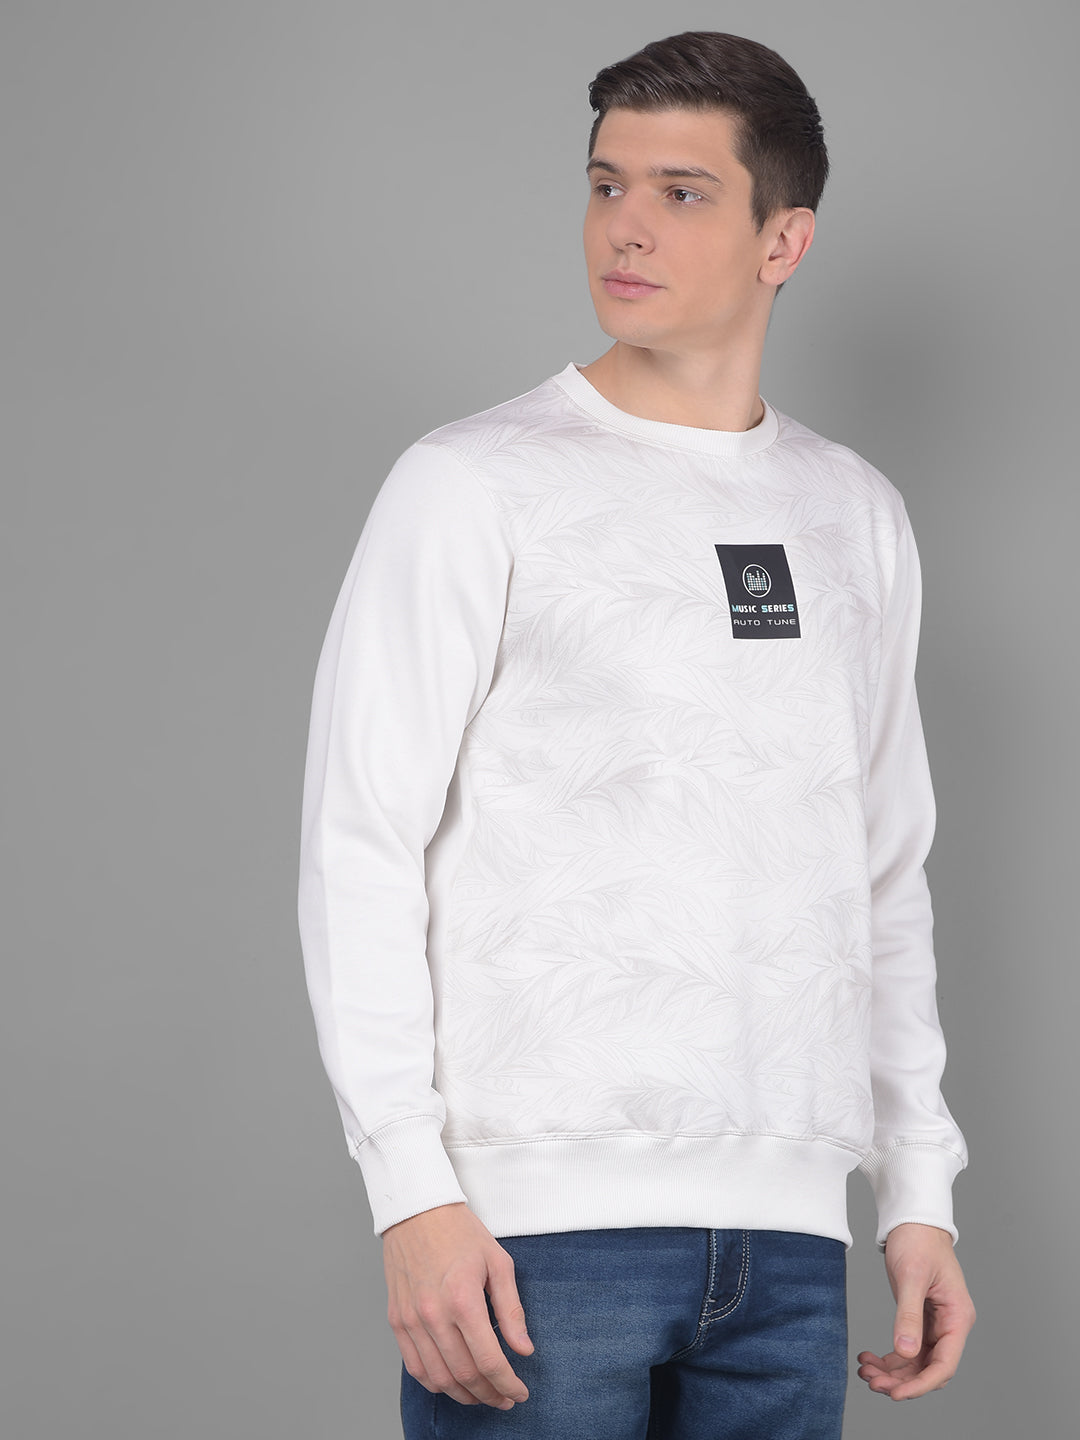 cobb off white printed round neck sweatshirt